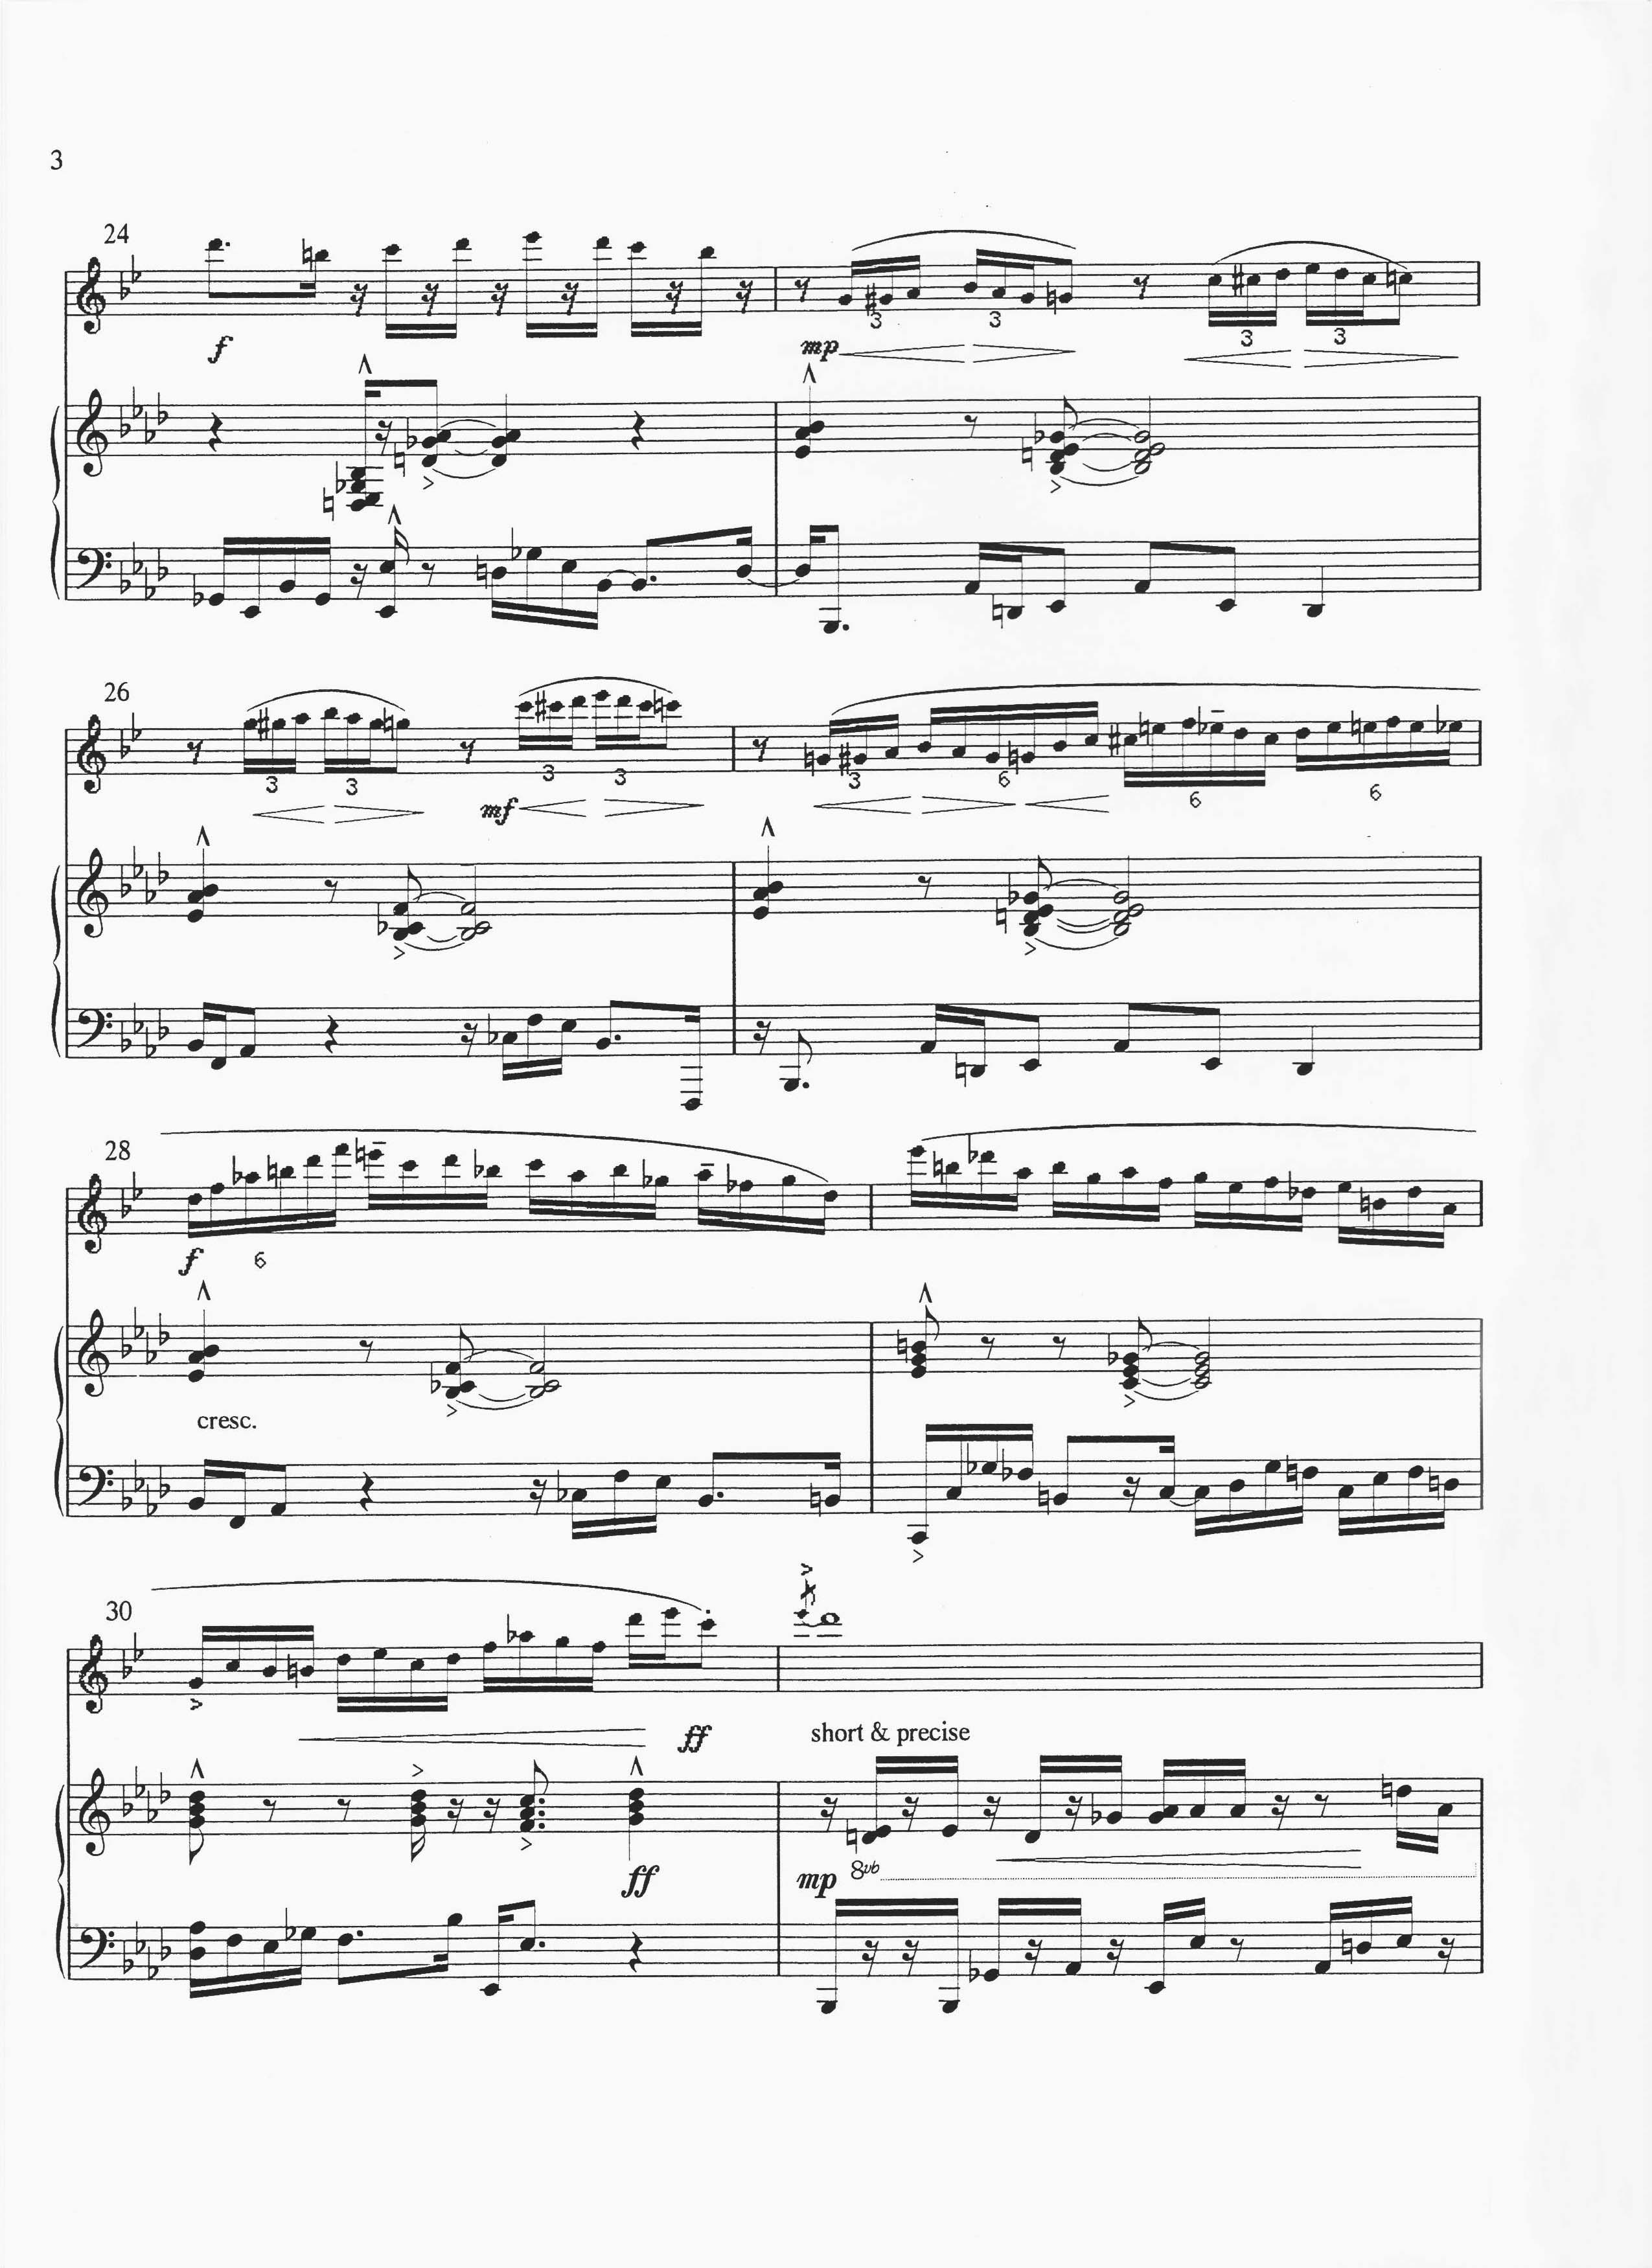 Sonata for Tenor Saxophone p03